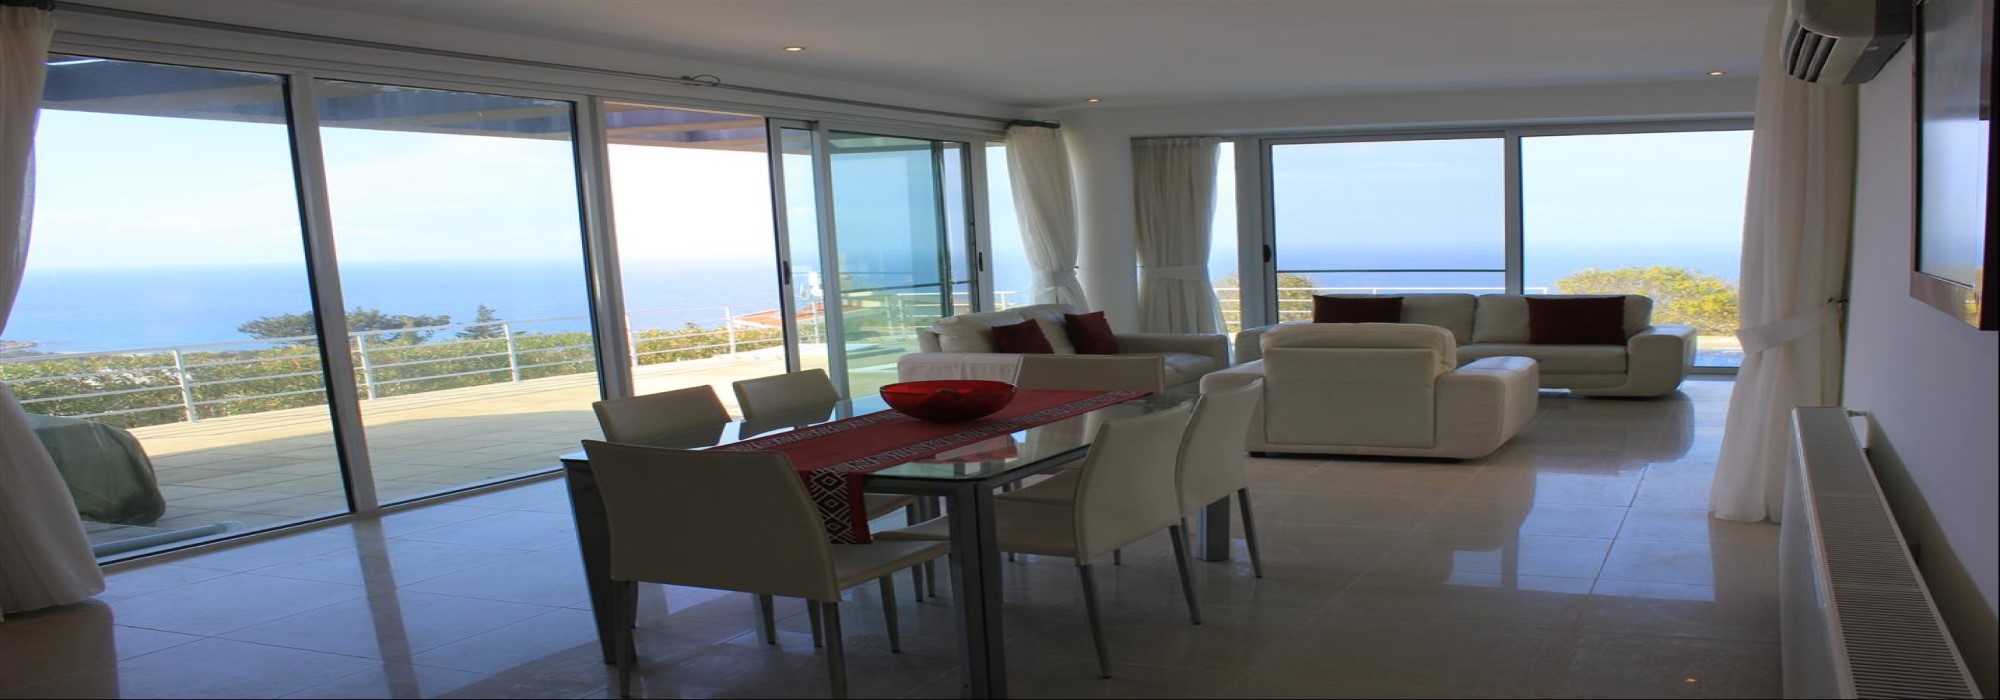 Desirable 3 Bedroom Villa With Breathtaking Panoramic Sea And Mountains Views Location Esentepe, Kyrenia